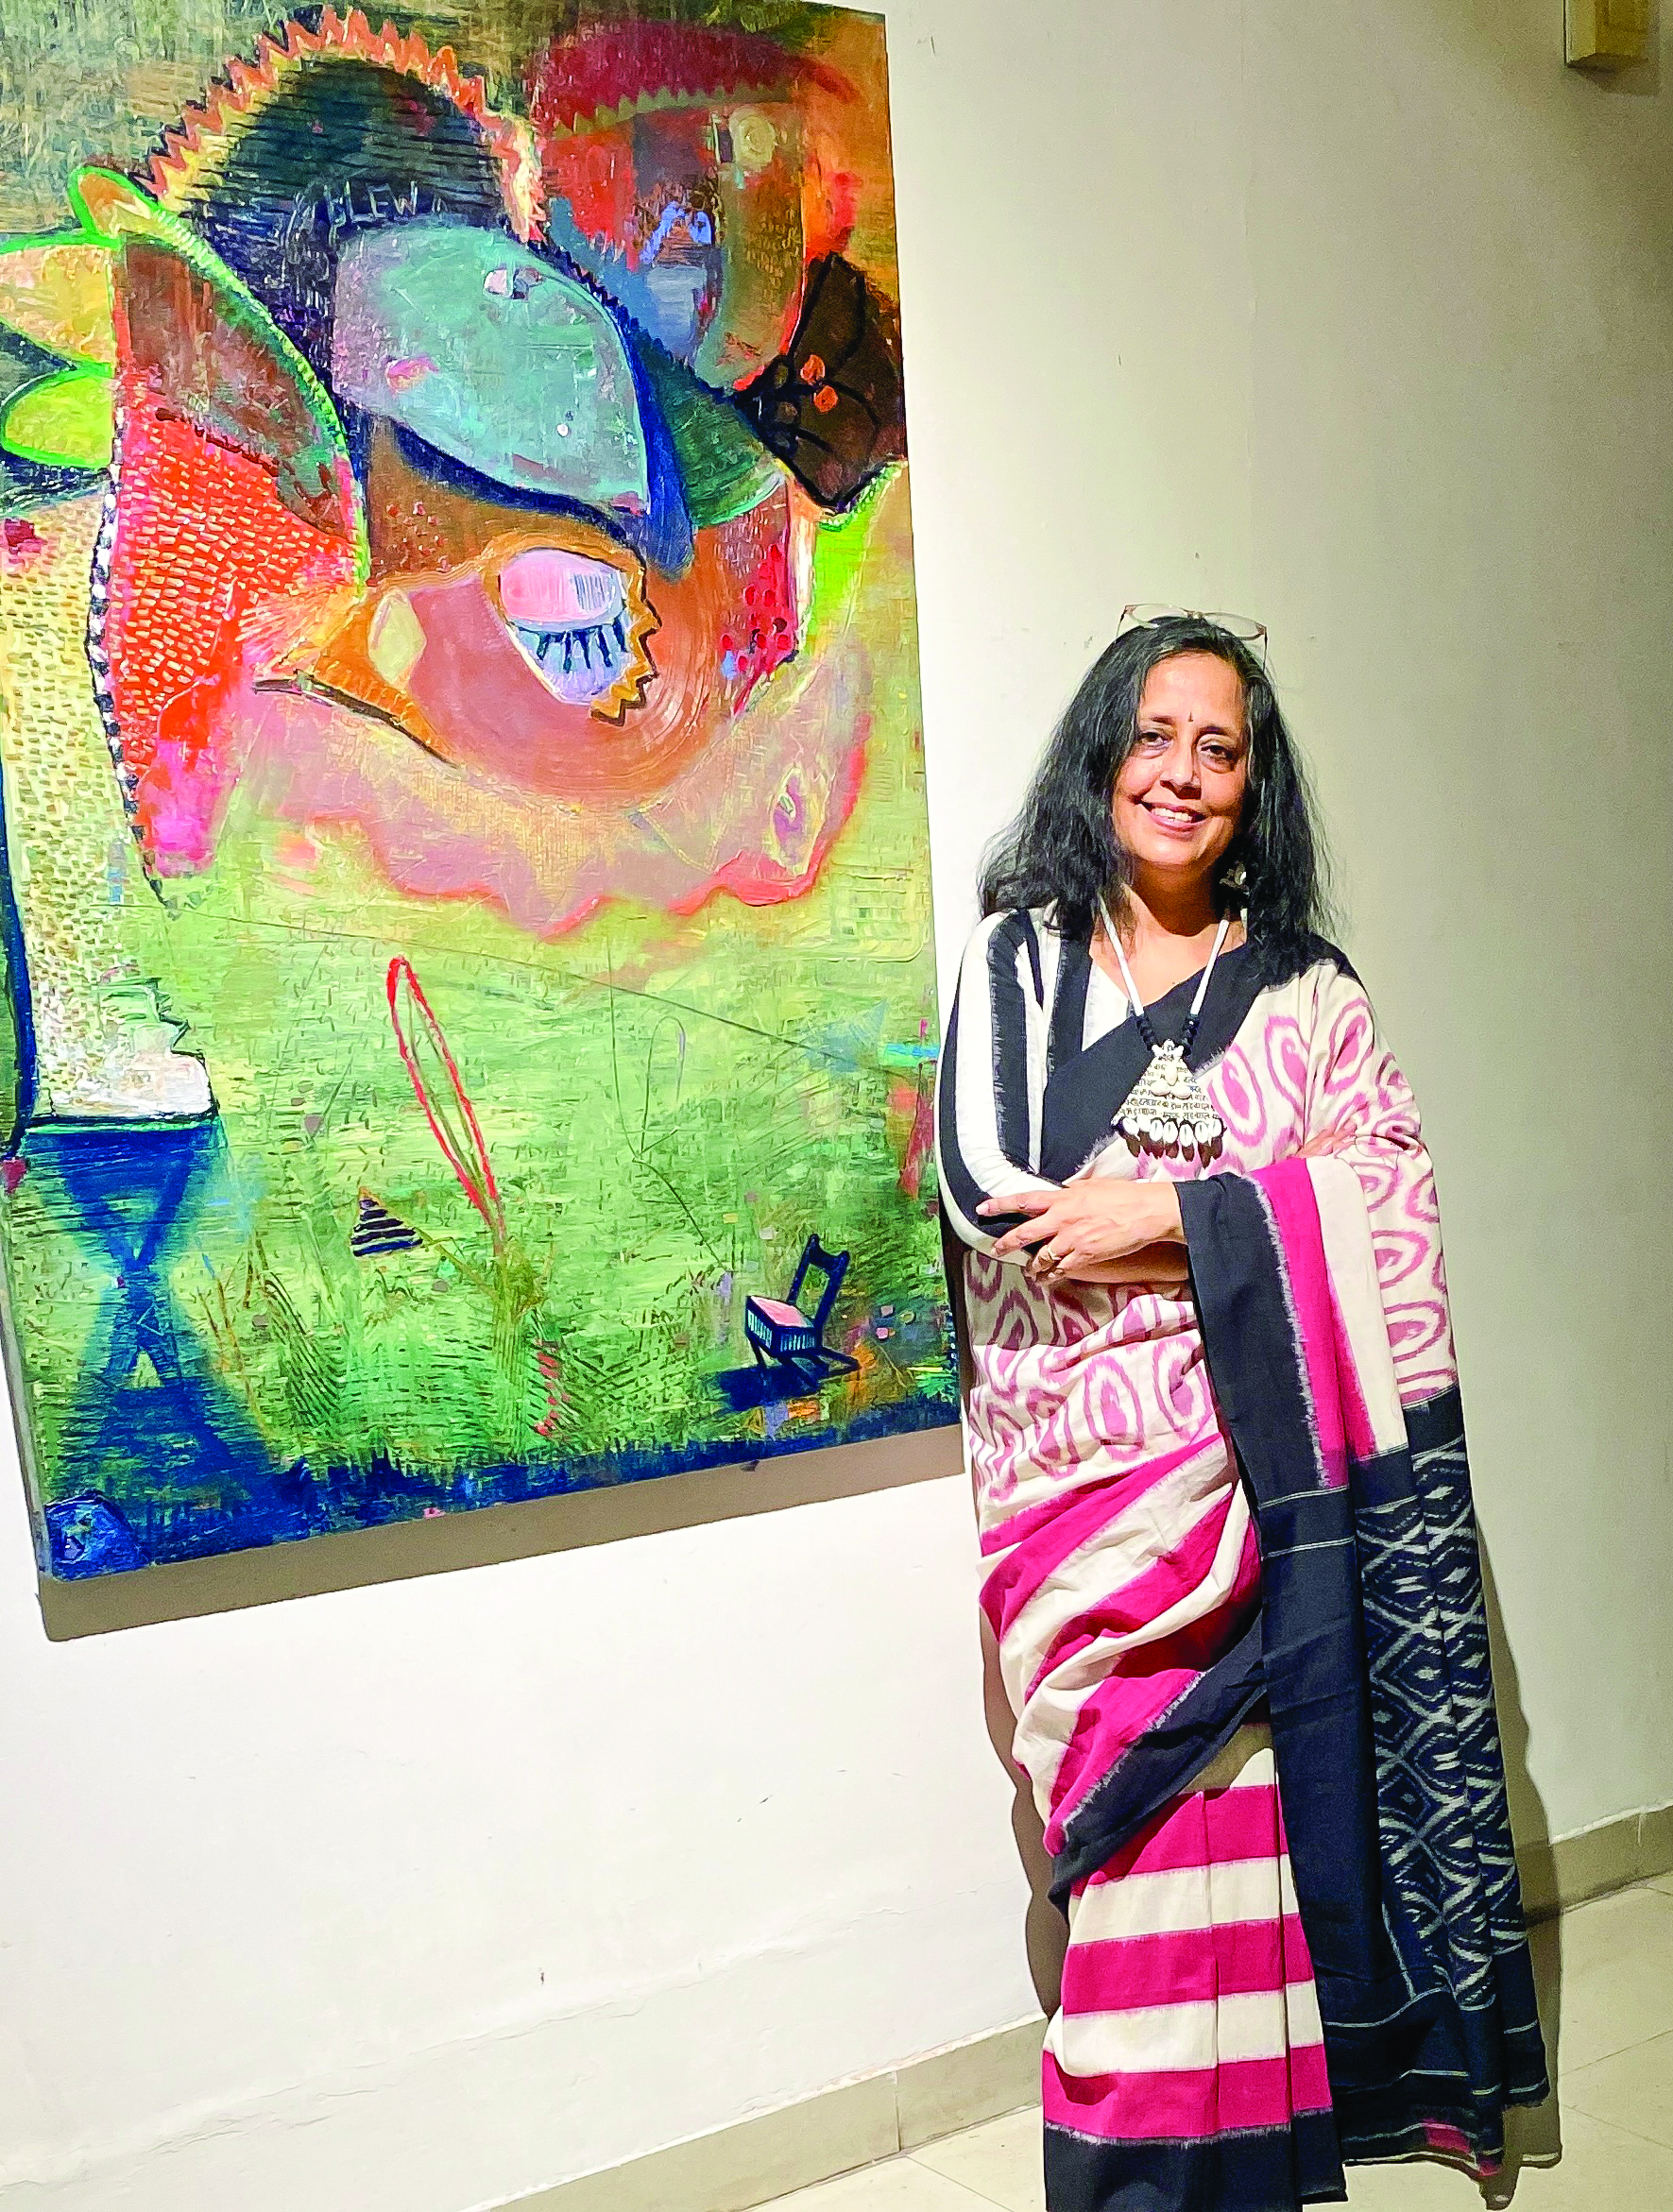 Solo exhibition ‘Here Comes The Sun’ set to showcase artworks of artist Sangeeta Singh